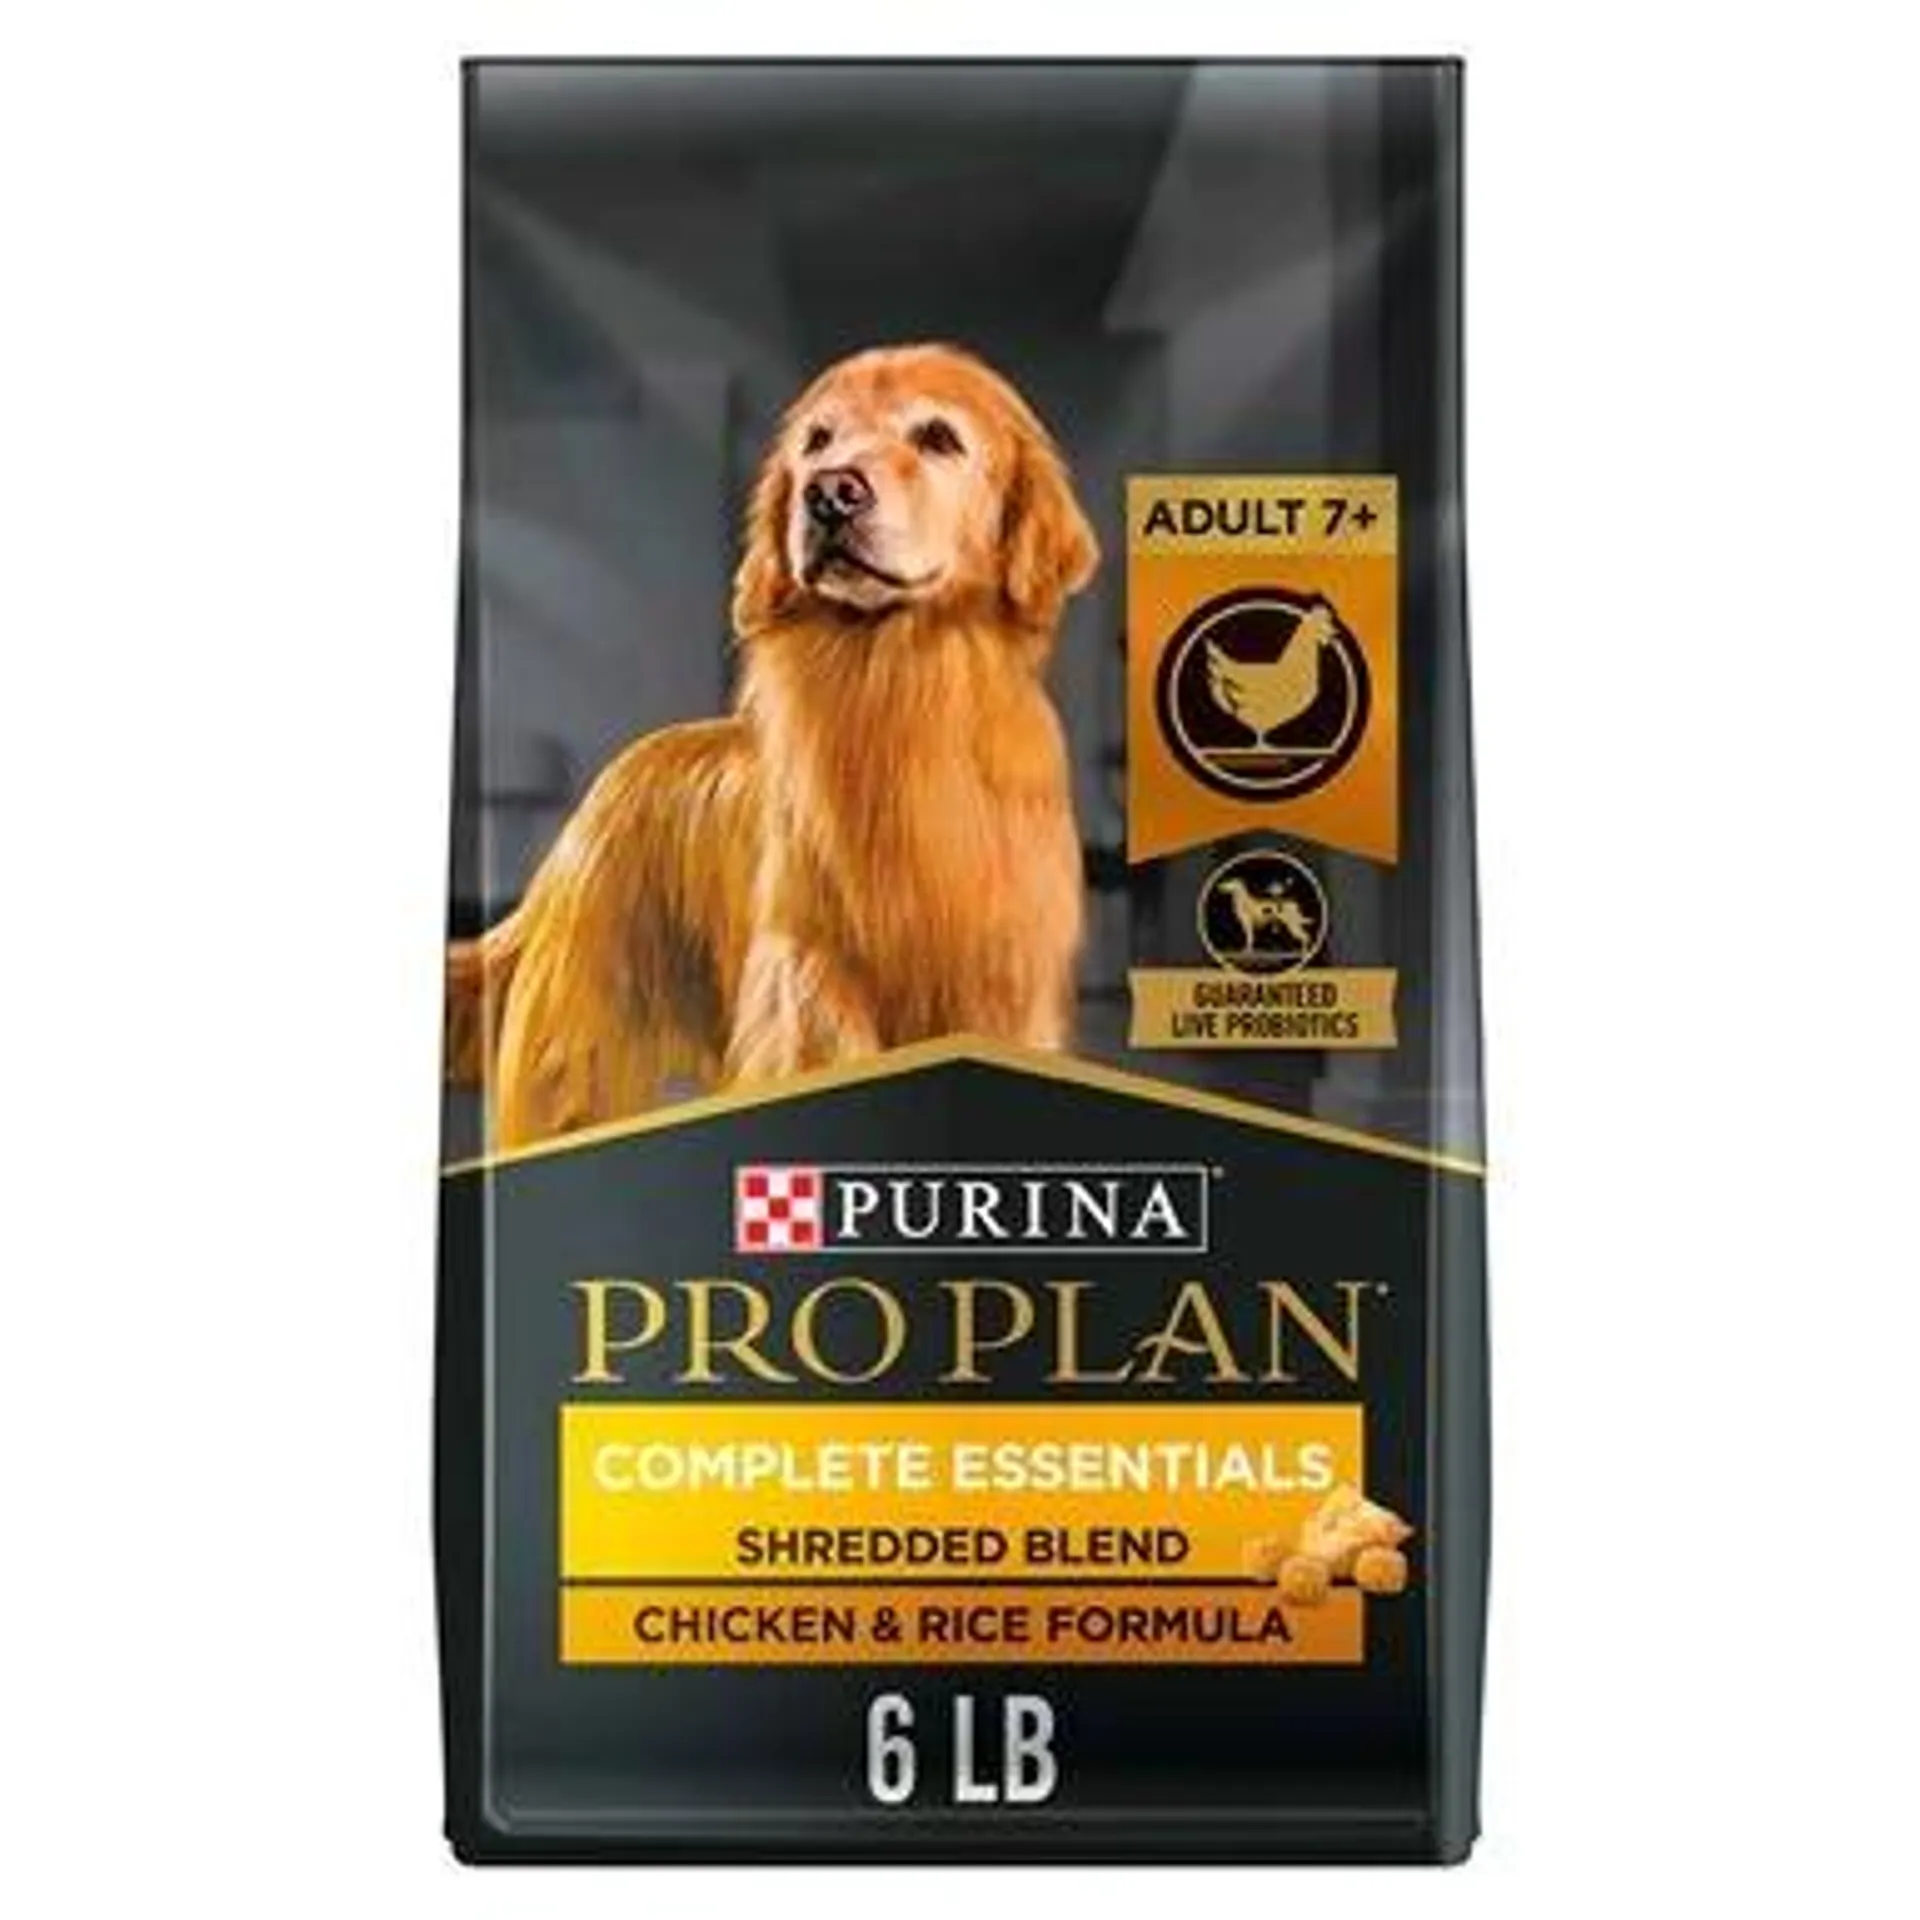 Purina Pro Plan Senior Dog Food With Probiotics for Dogs, Shredded Blend Chicken & Rice Formula - 6 Pound Bag